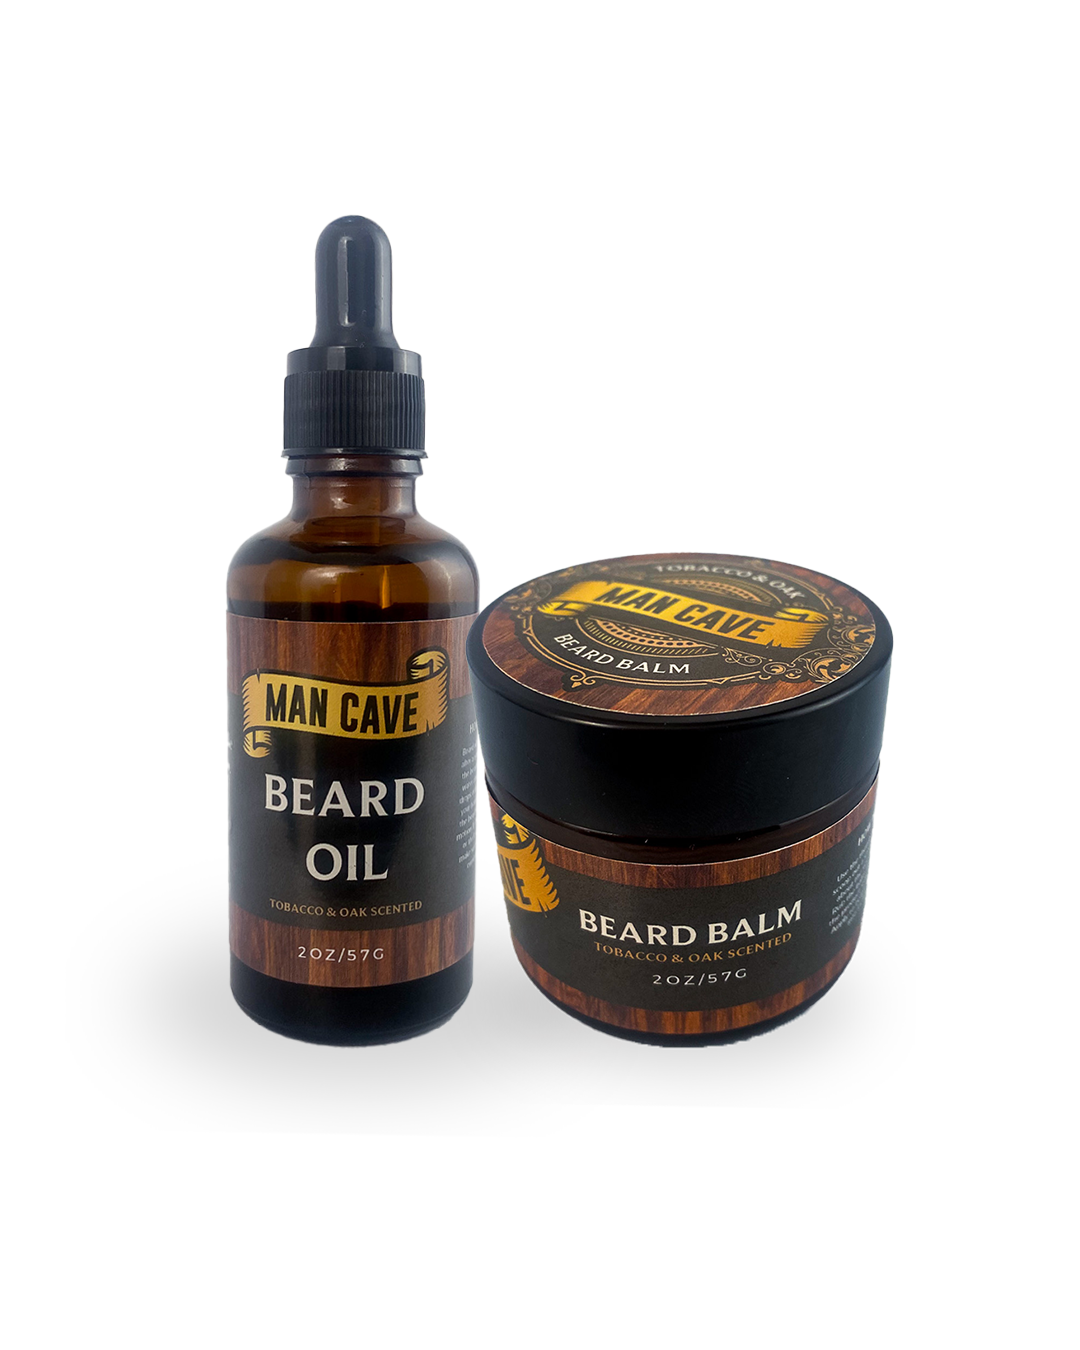 BEARD BUNDLE - Beard Balm & Beard Oil - Tobacco & Oak Scented